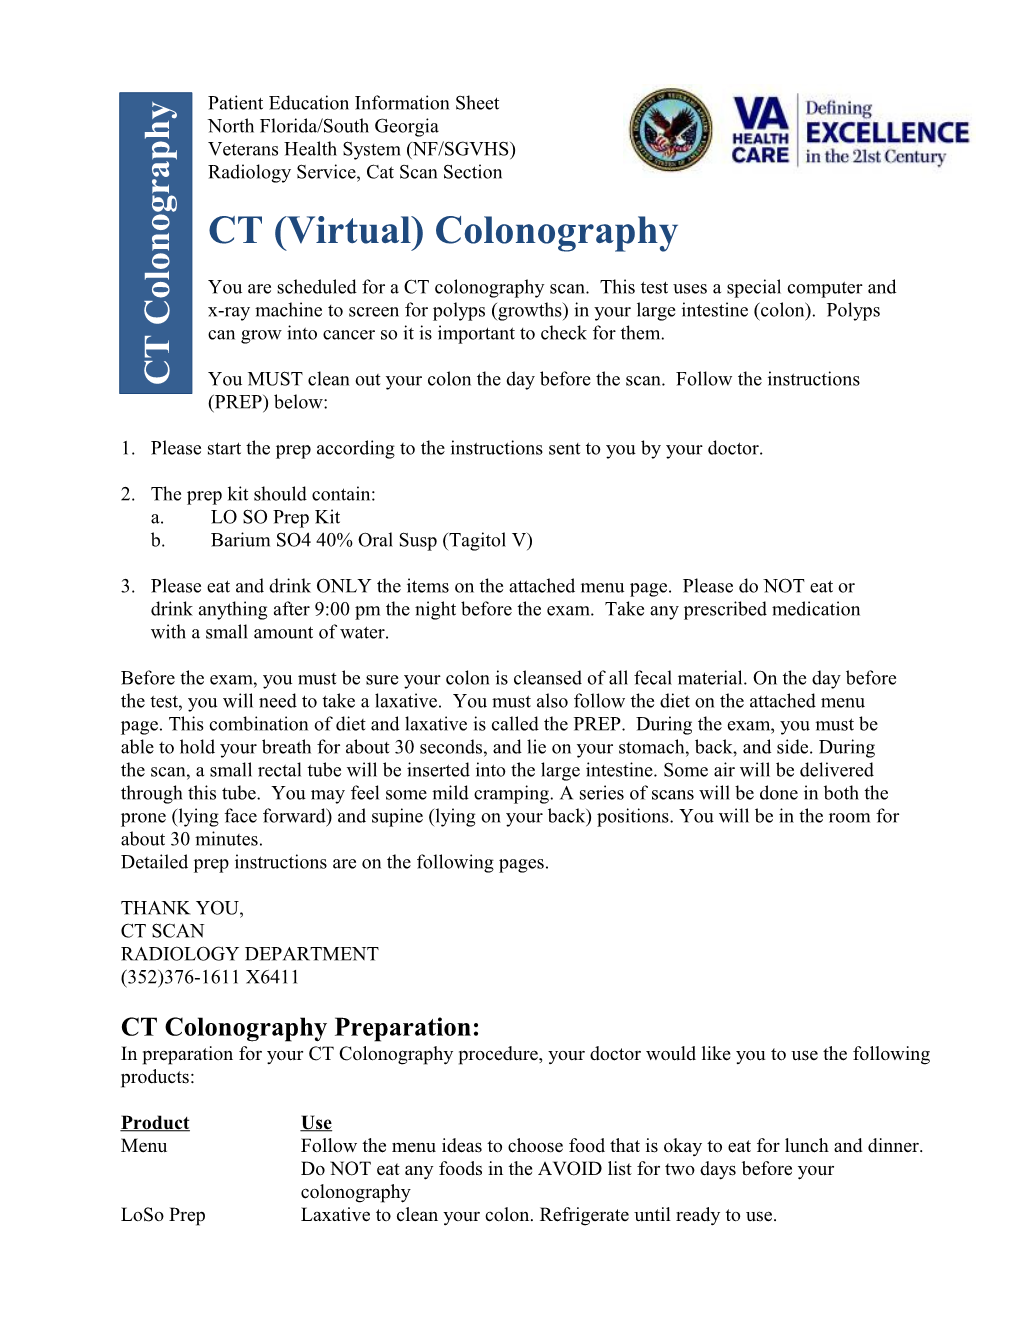 CT (Virtual) Colonography